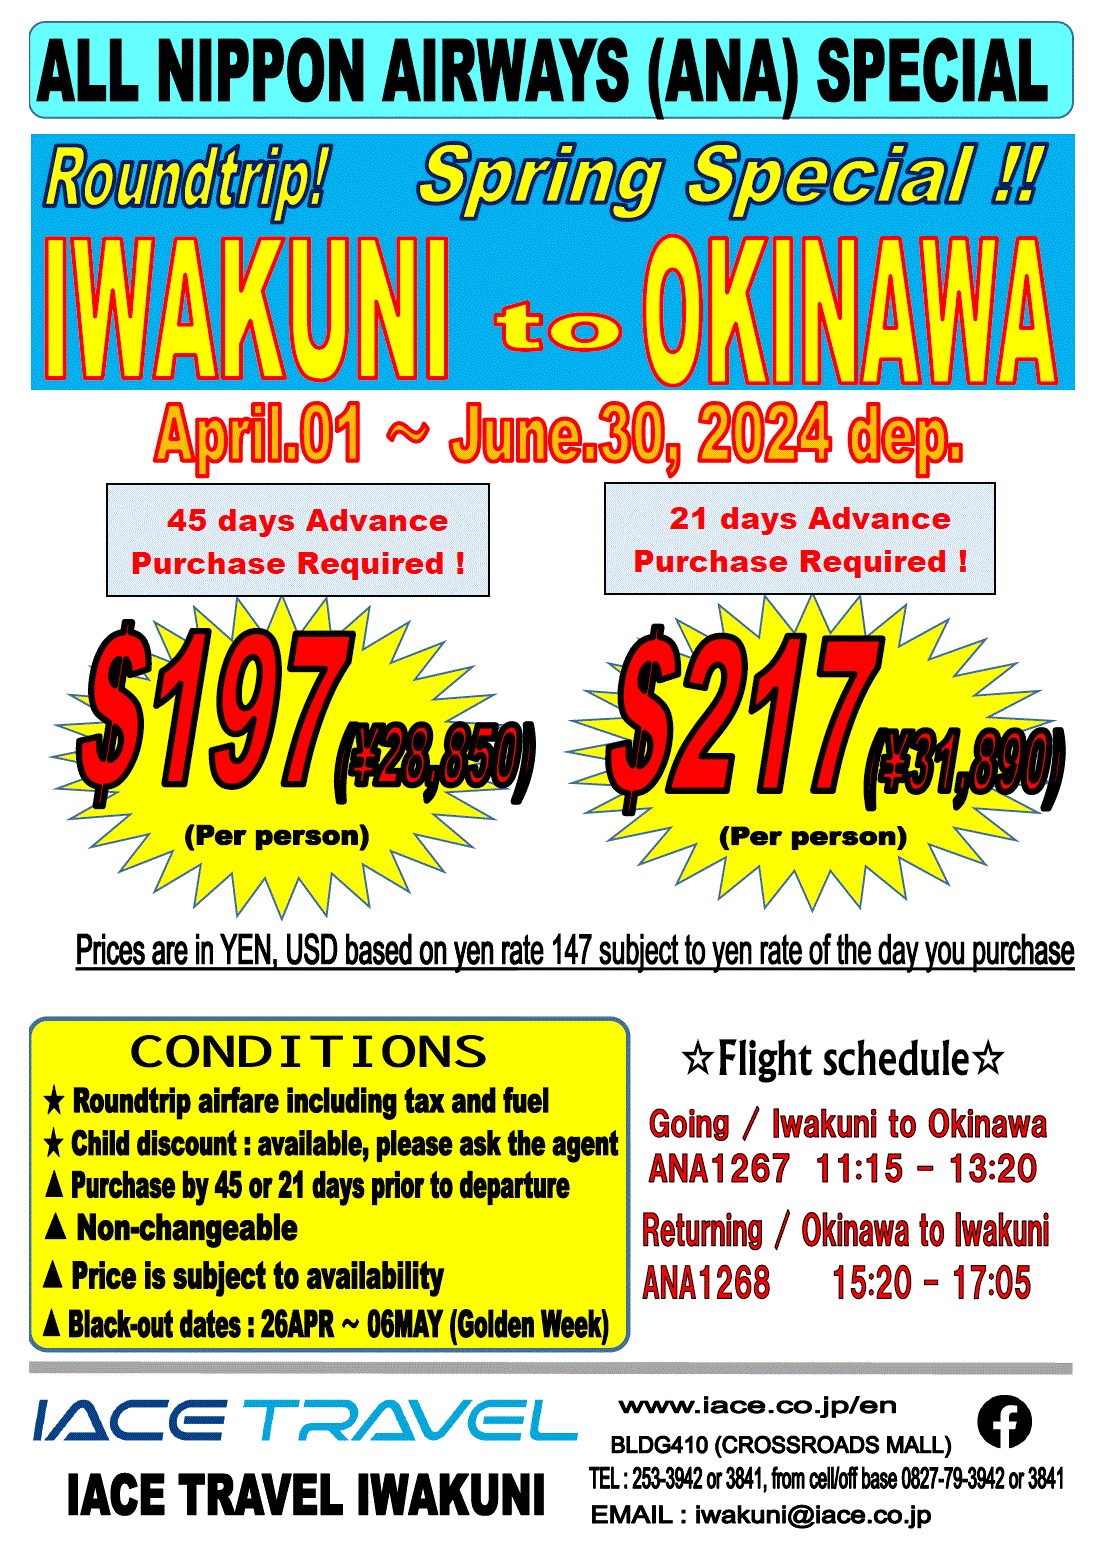 Iwakuni to Okinawa (Travel Agency Private fare)